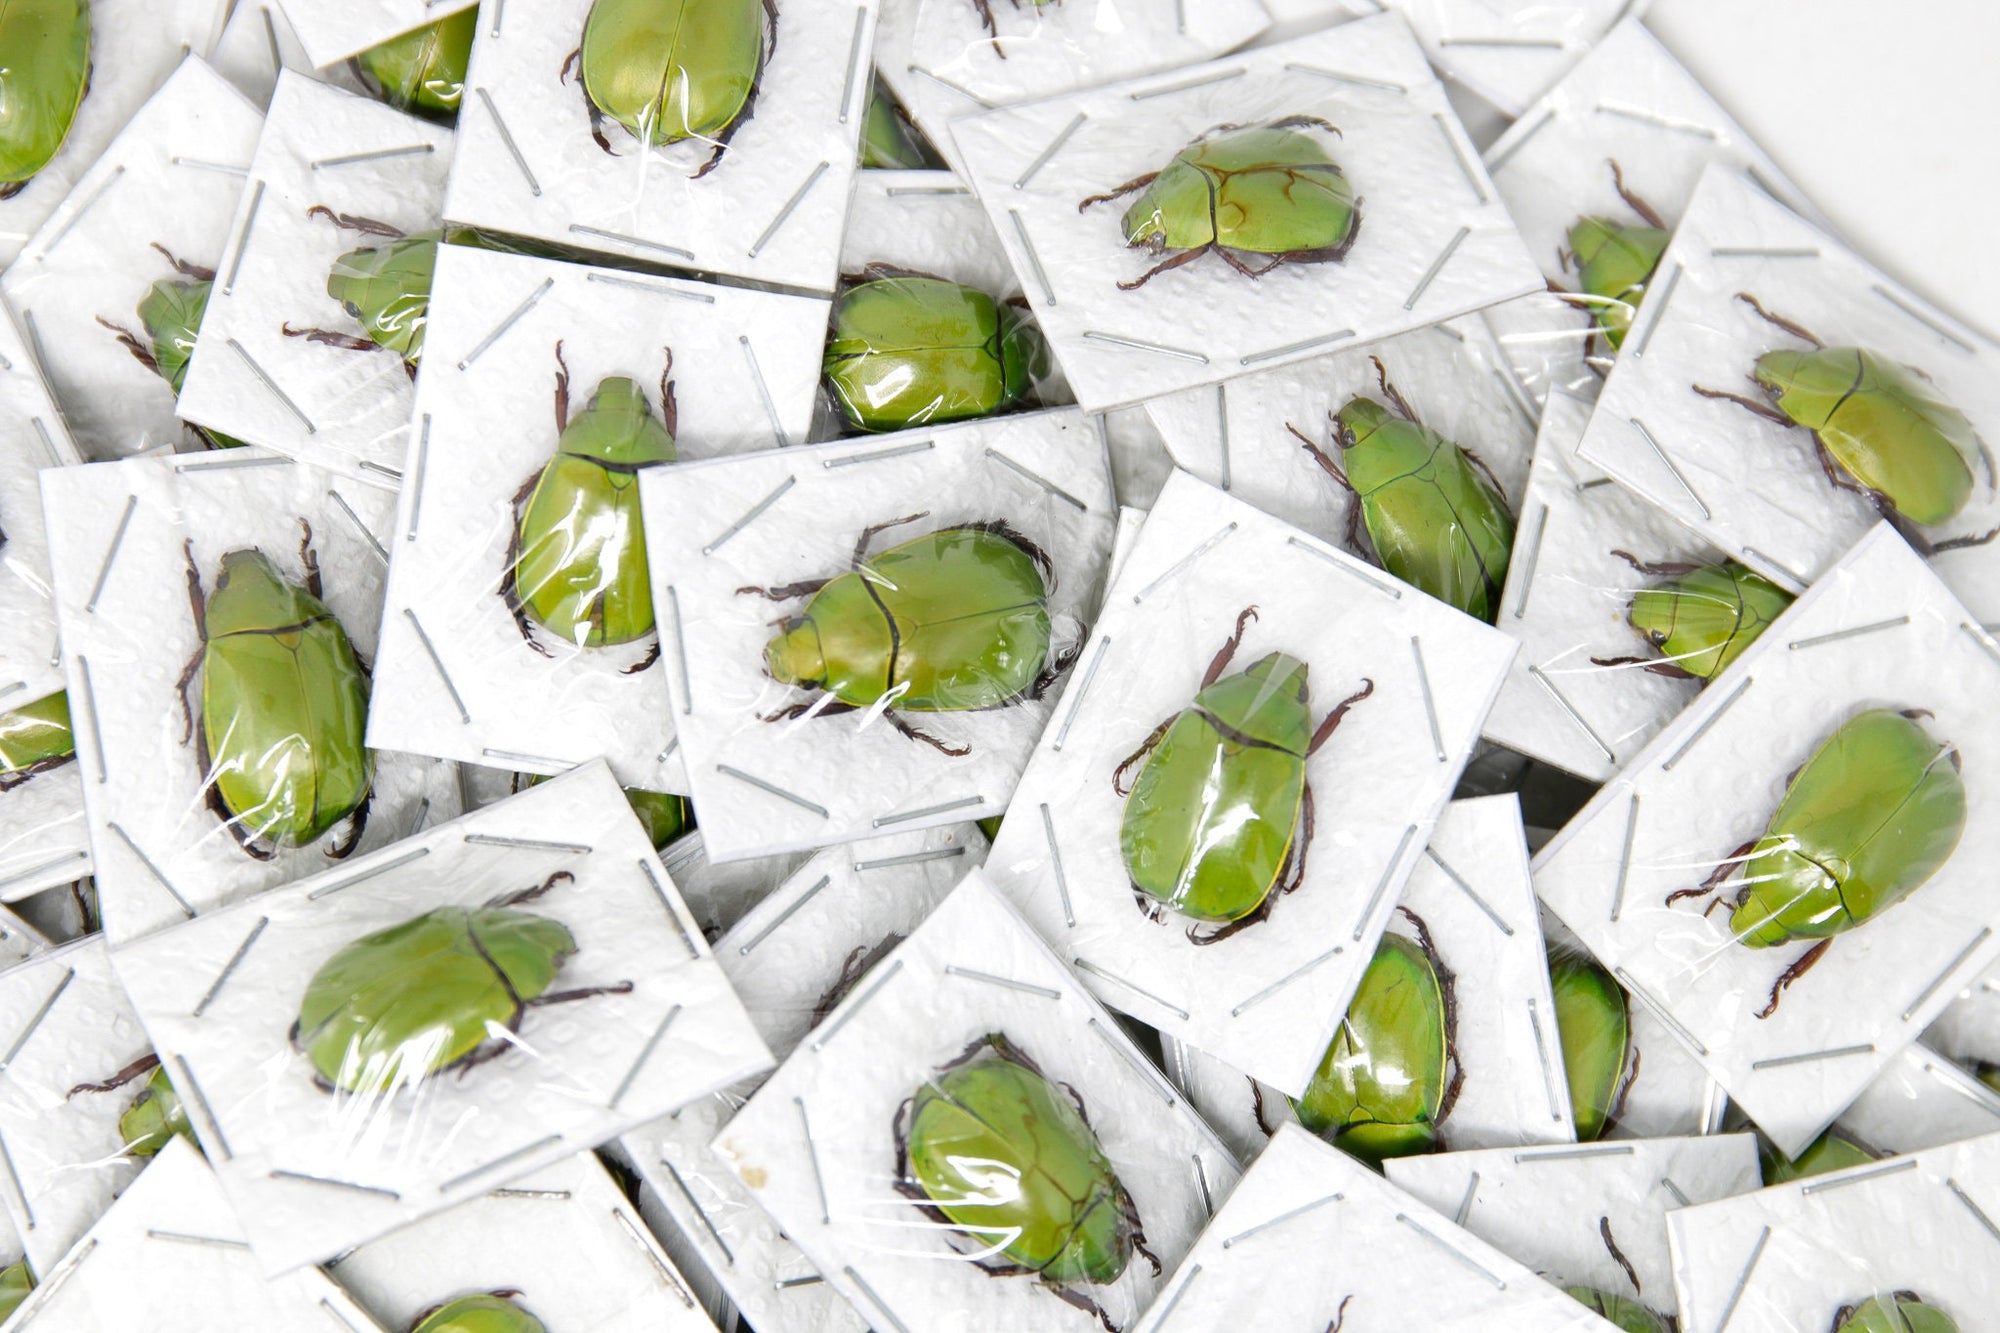 Apple Green Scarab Beetles (Anomala dimidiata) A1 Unmounted Specimens